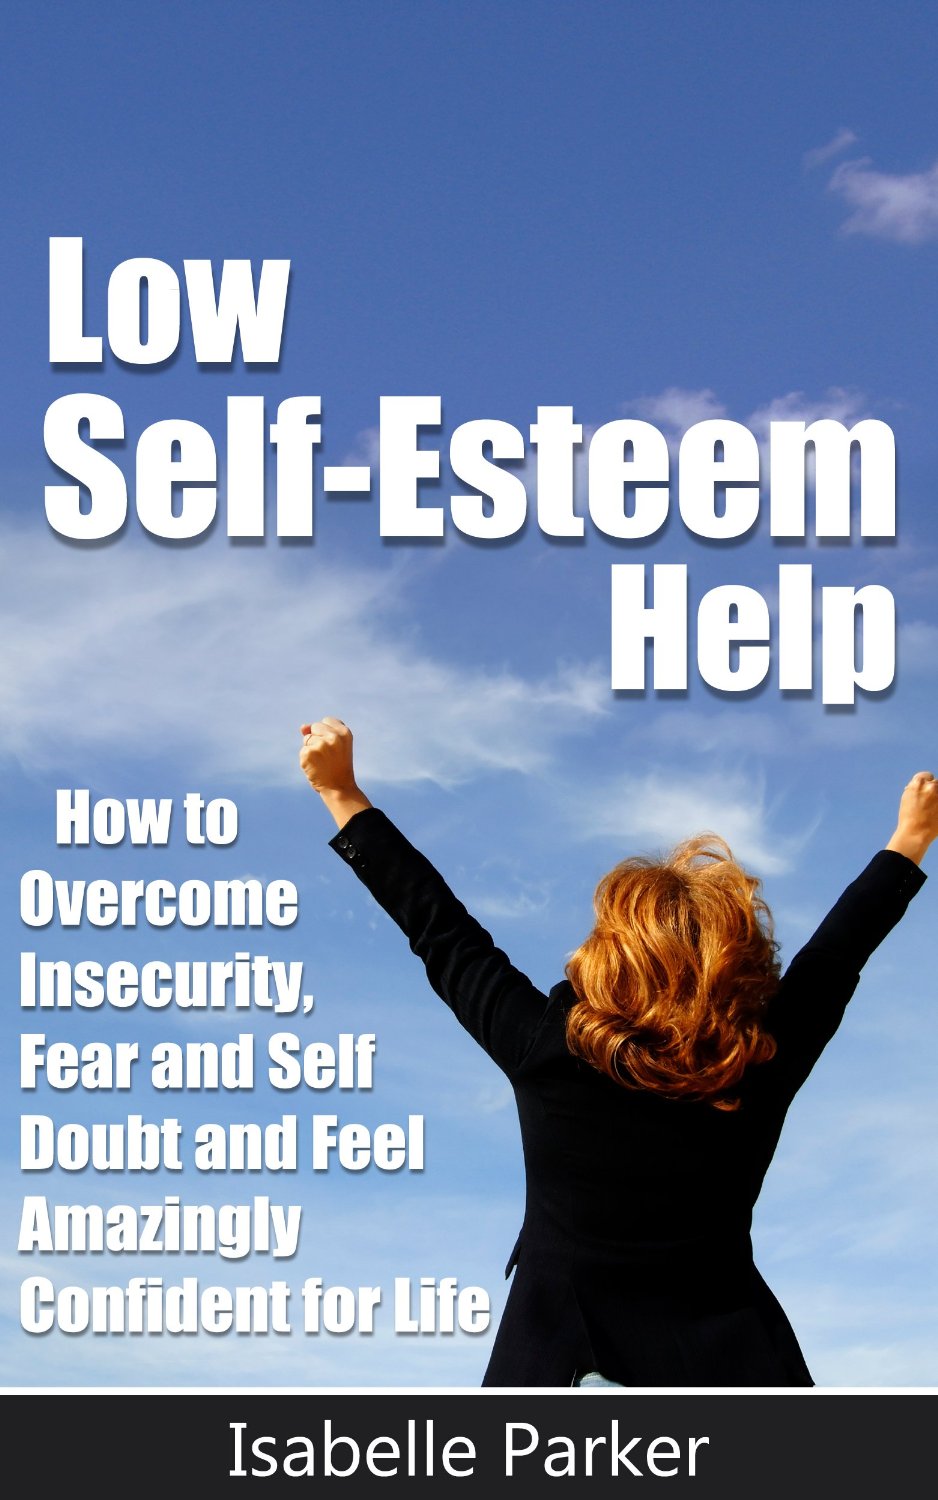 Low Self Esteem Help by Isabelle Parker